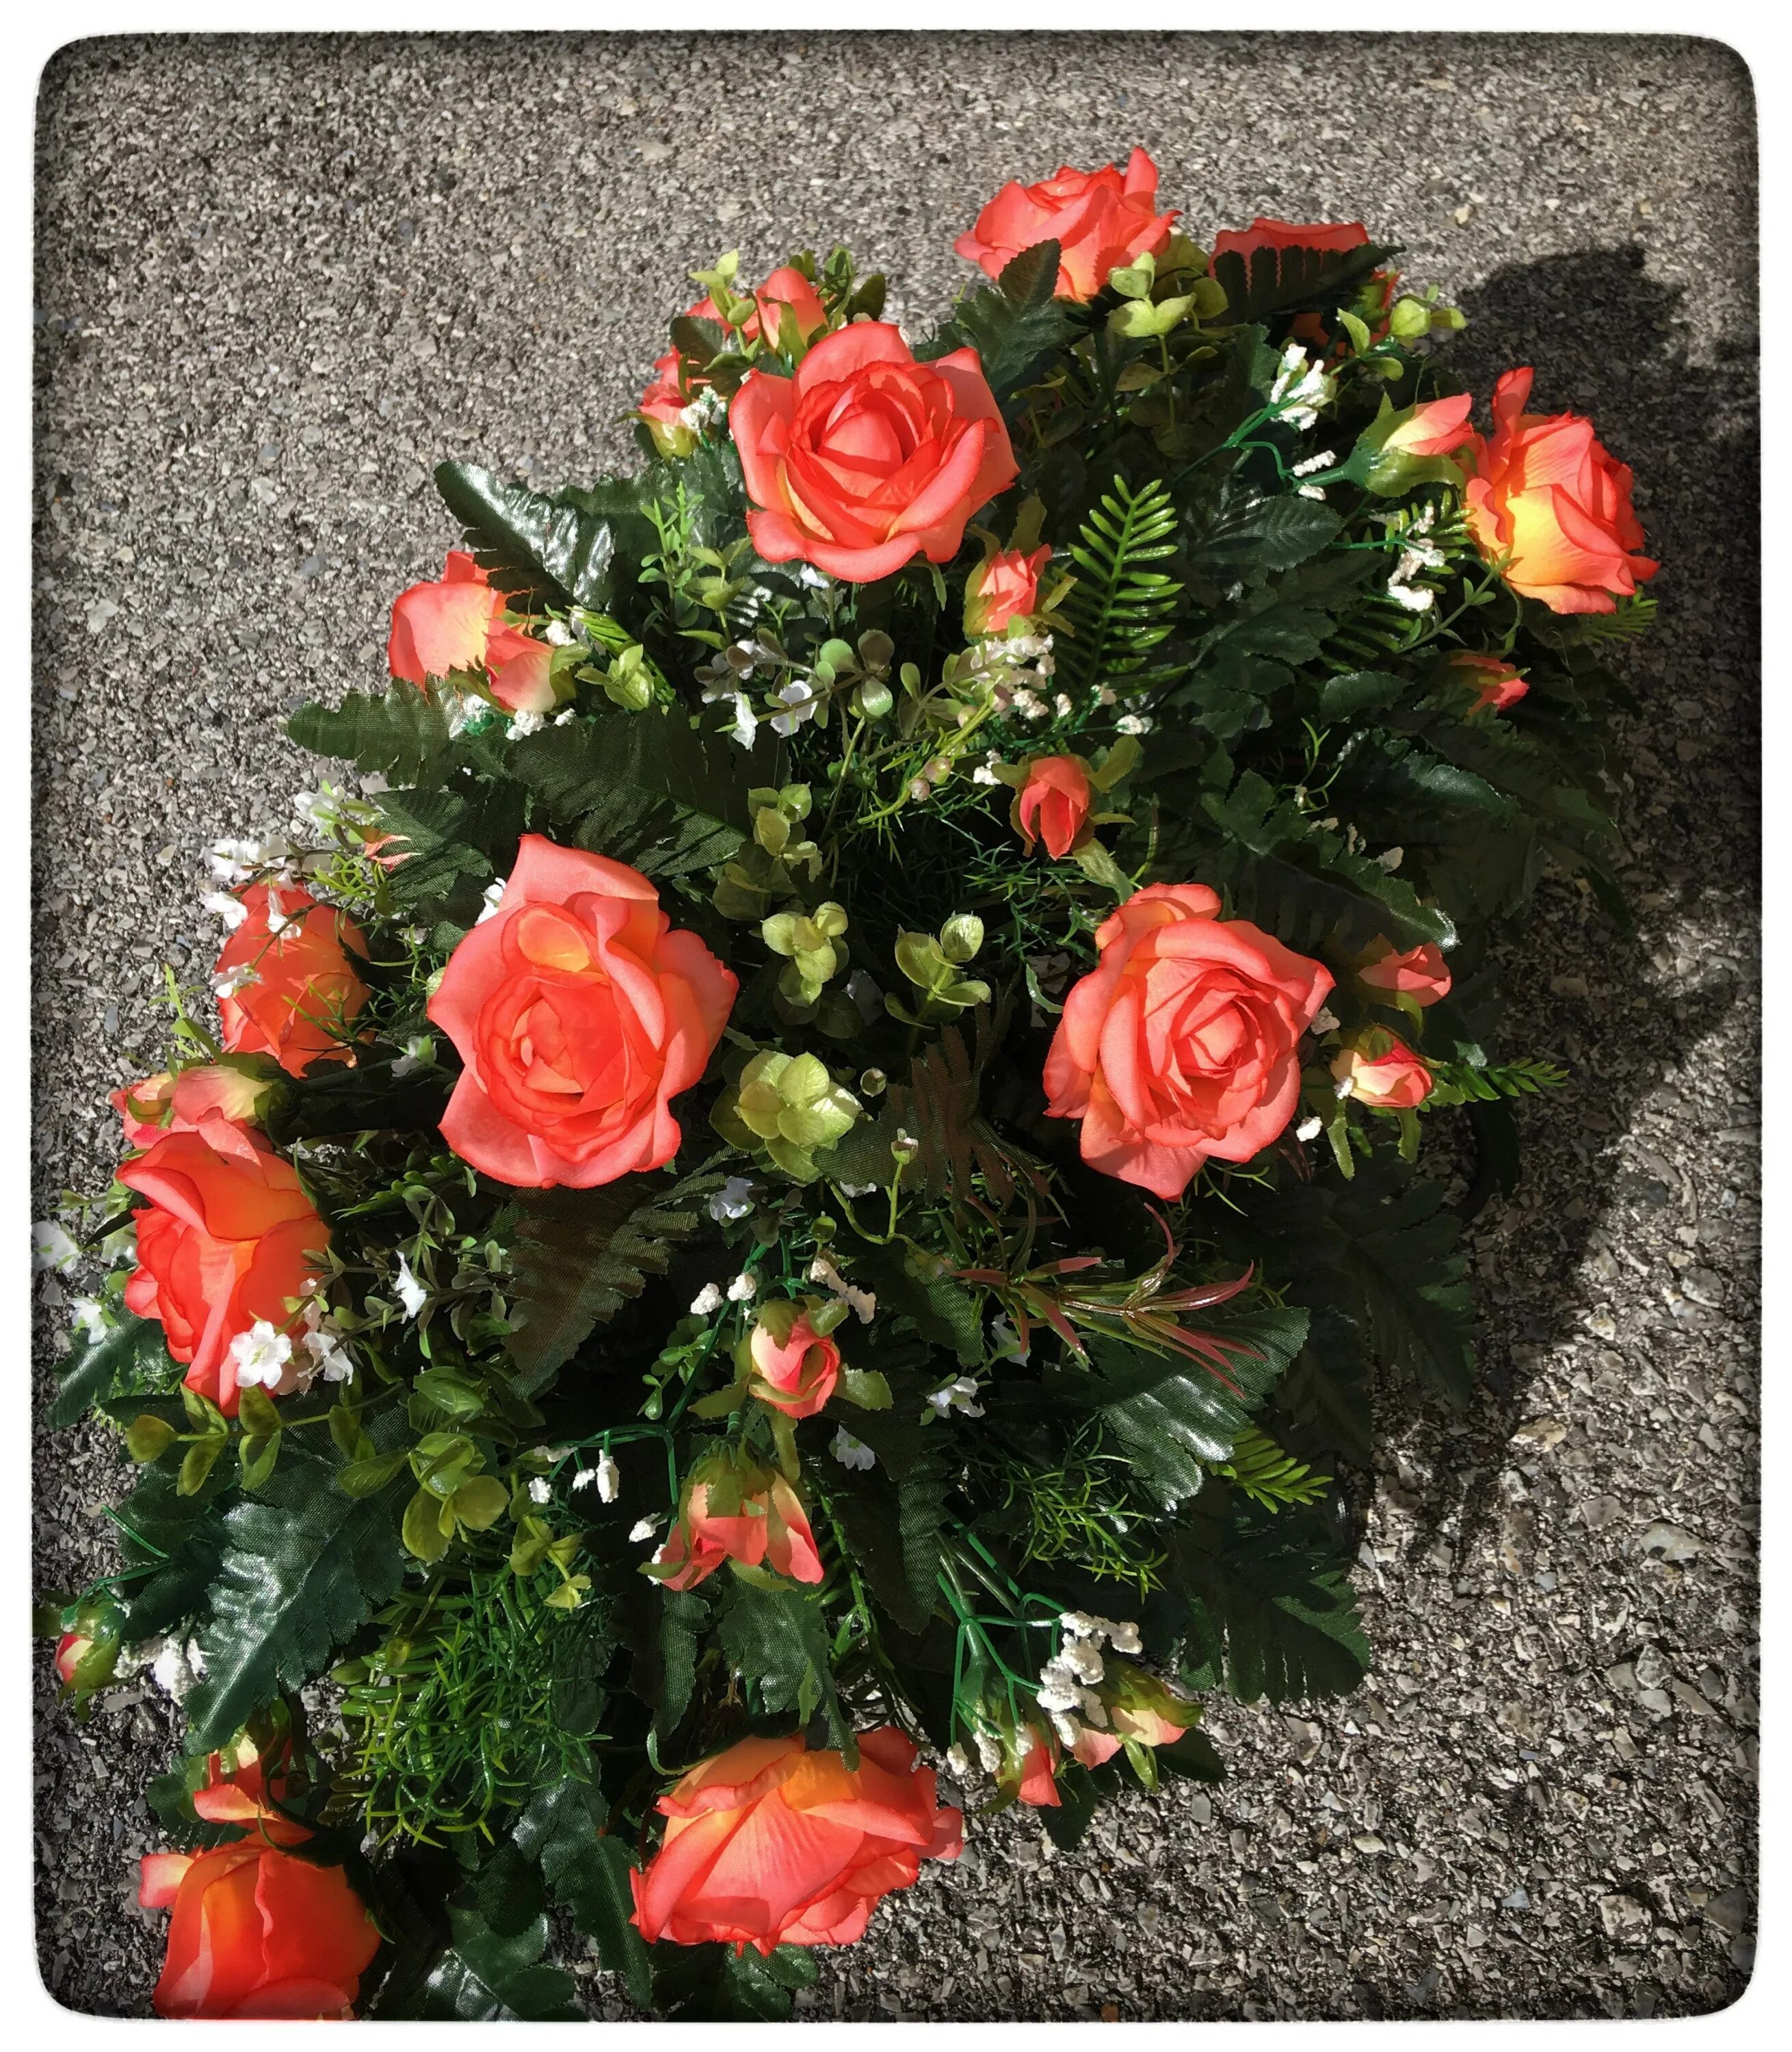 Цветы на кладбище спб. Искусственные цветы на кладбище. Искусственные цветы шикарные для кладбища. Композиции из искусственных цветов на кладбище. Искусственные цветы на кладбище розы.